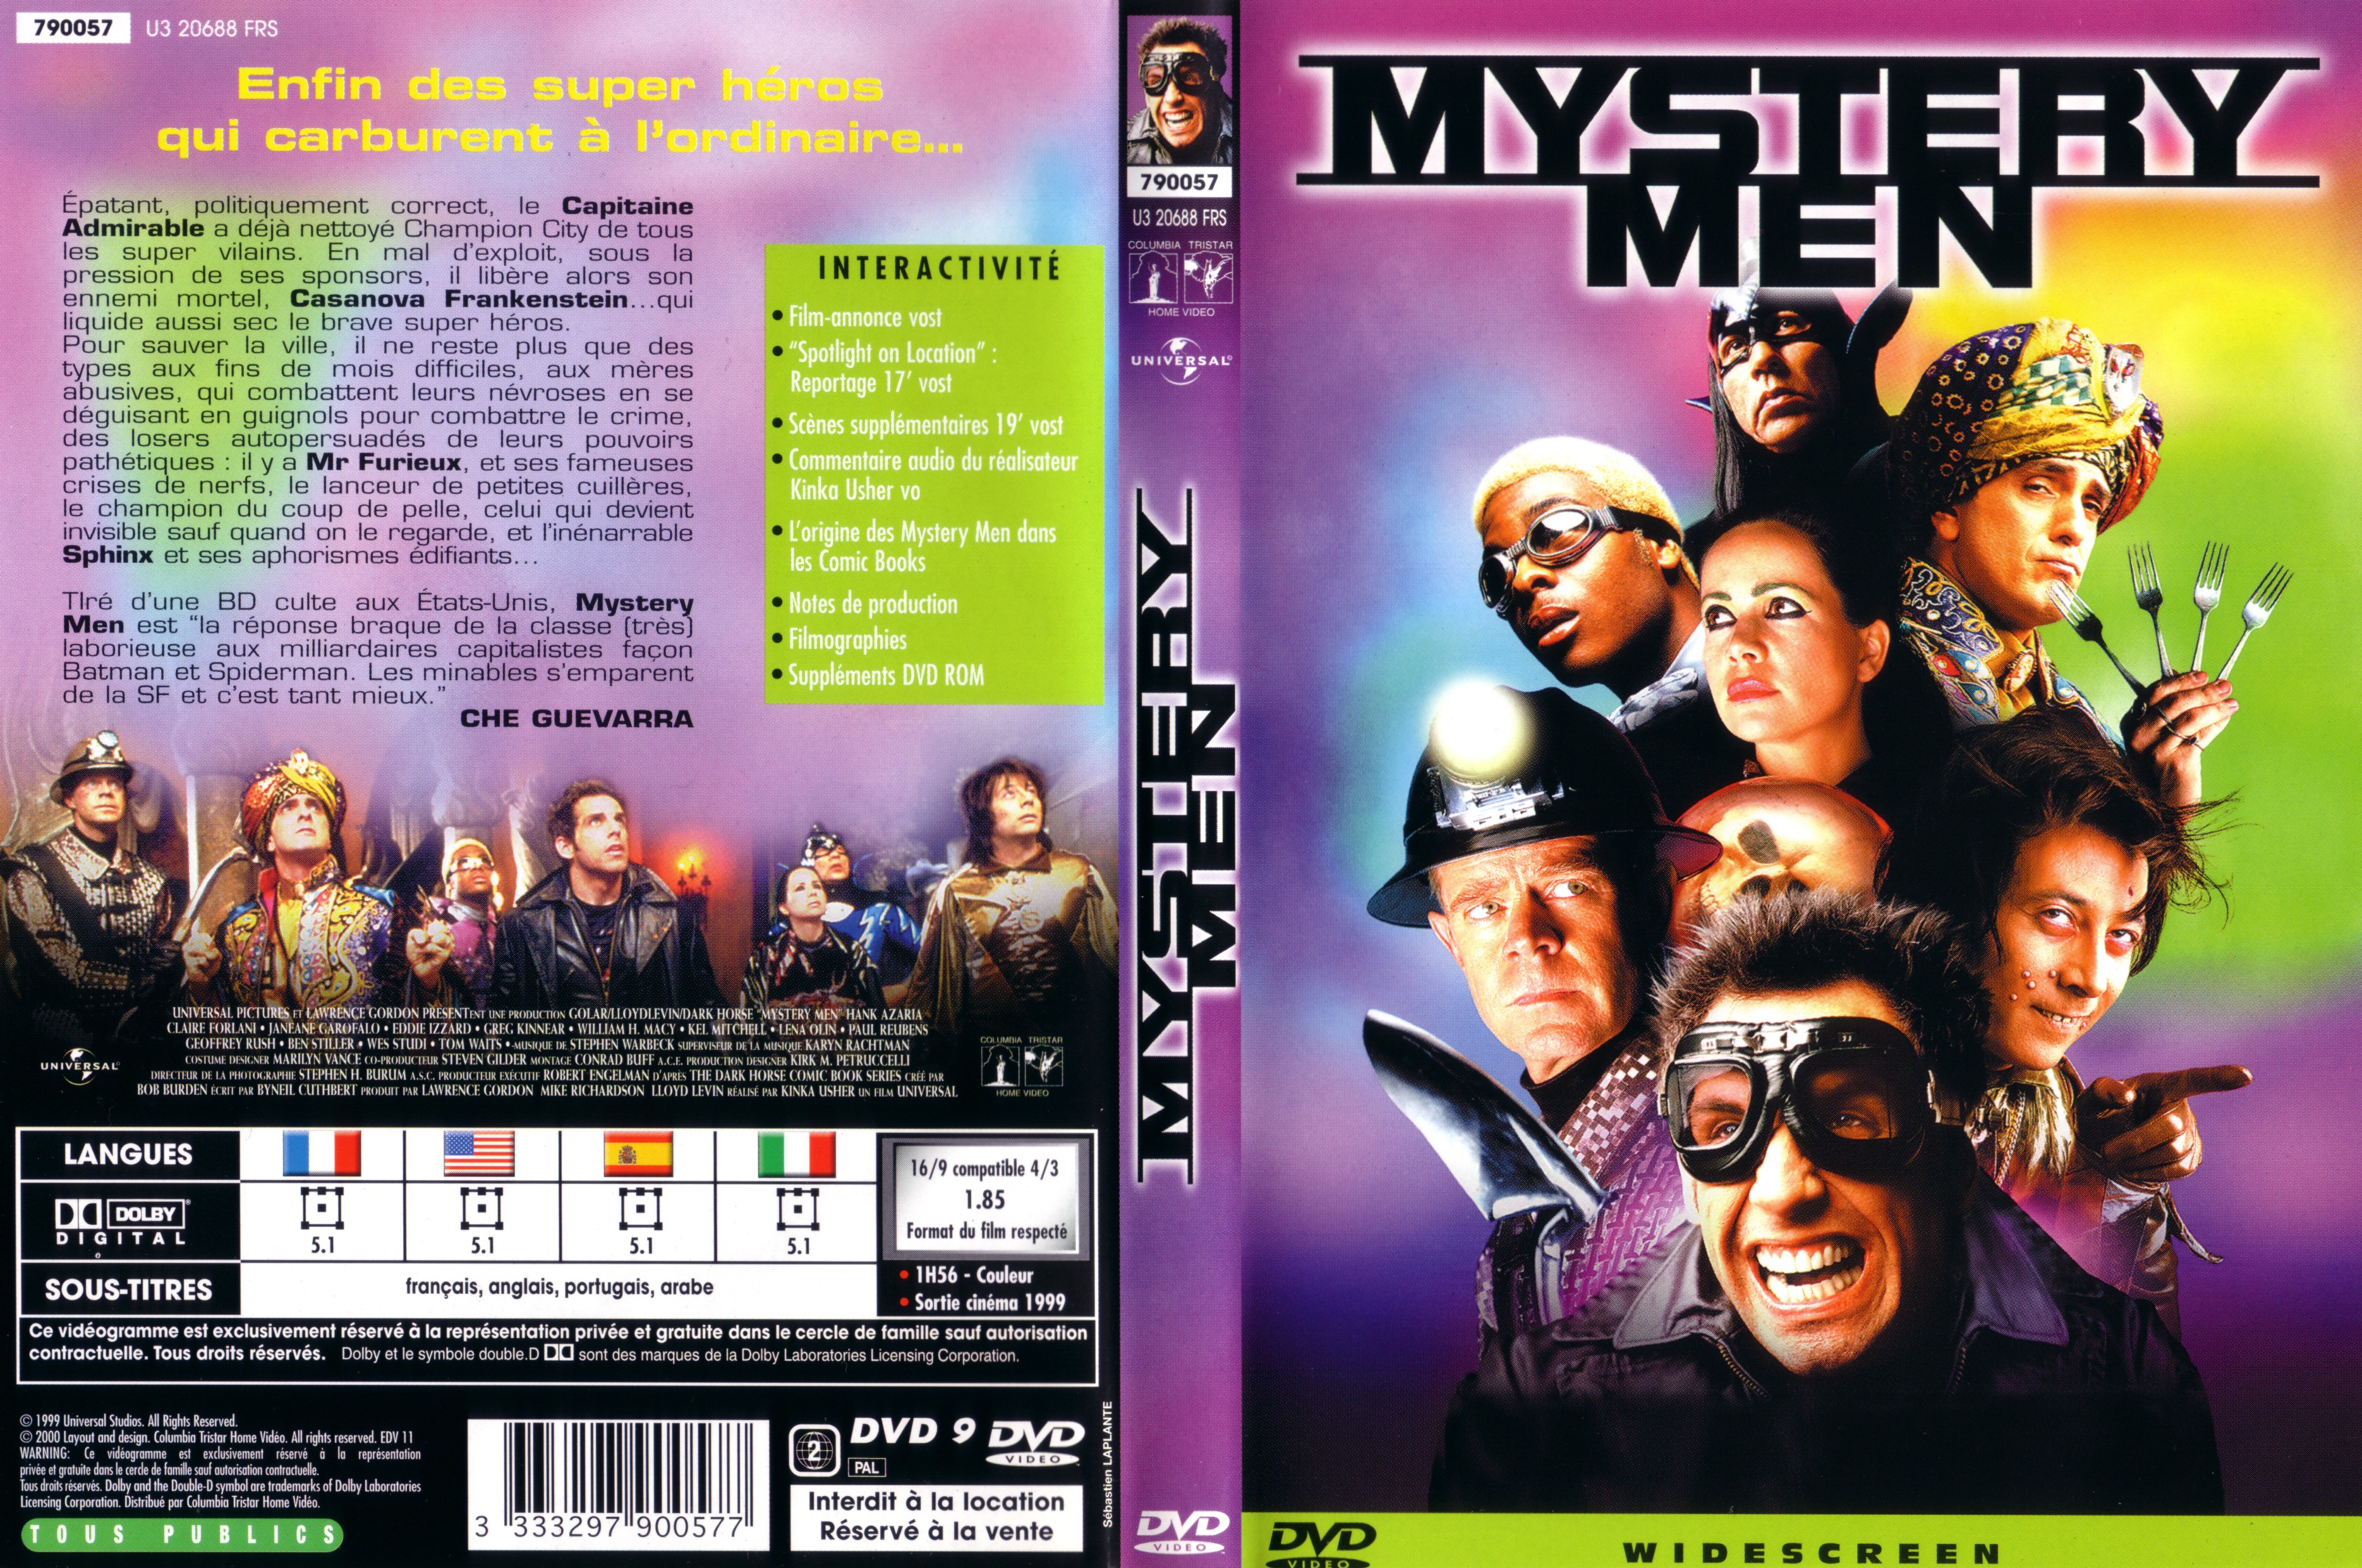 Jaquette DVD Mystery men v2